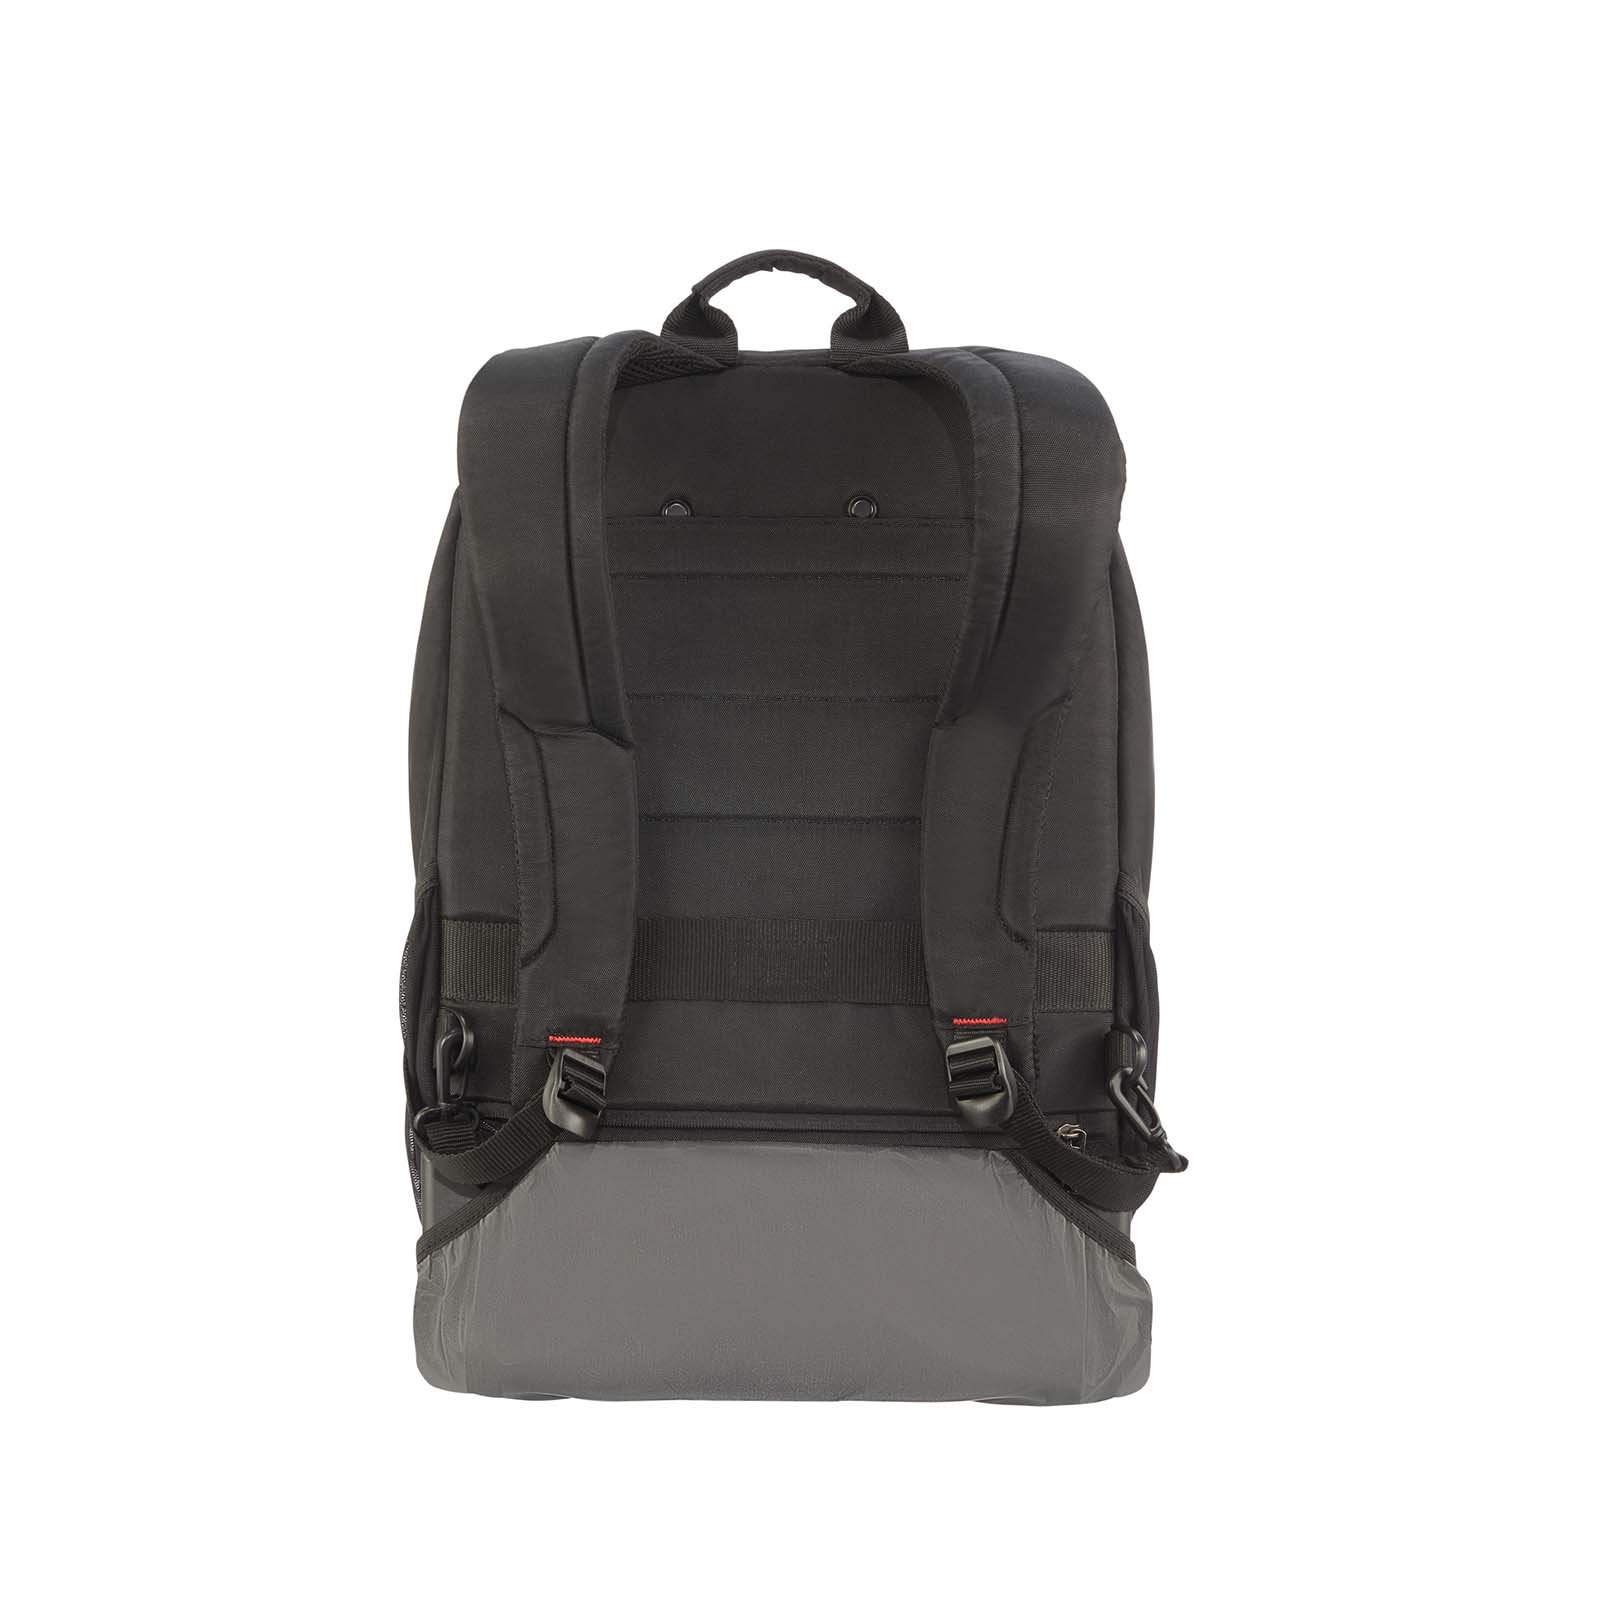 Samsonite-Guardit-2-17-Inch-Wheeled-Laptop-Backpack-Harness